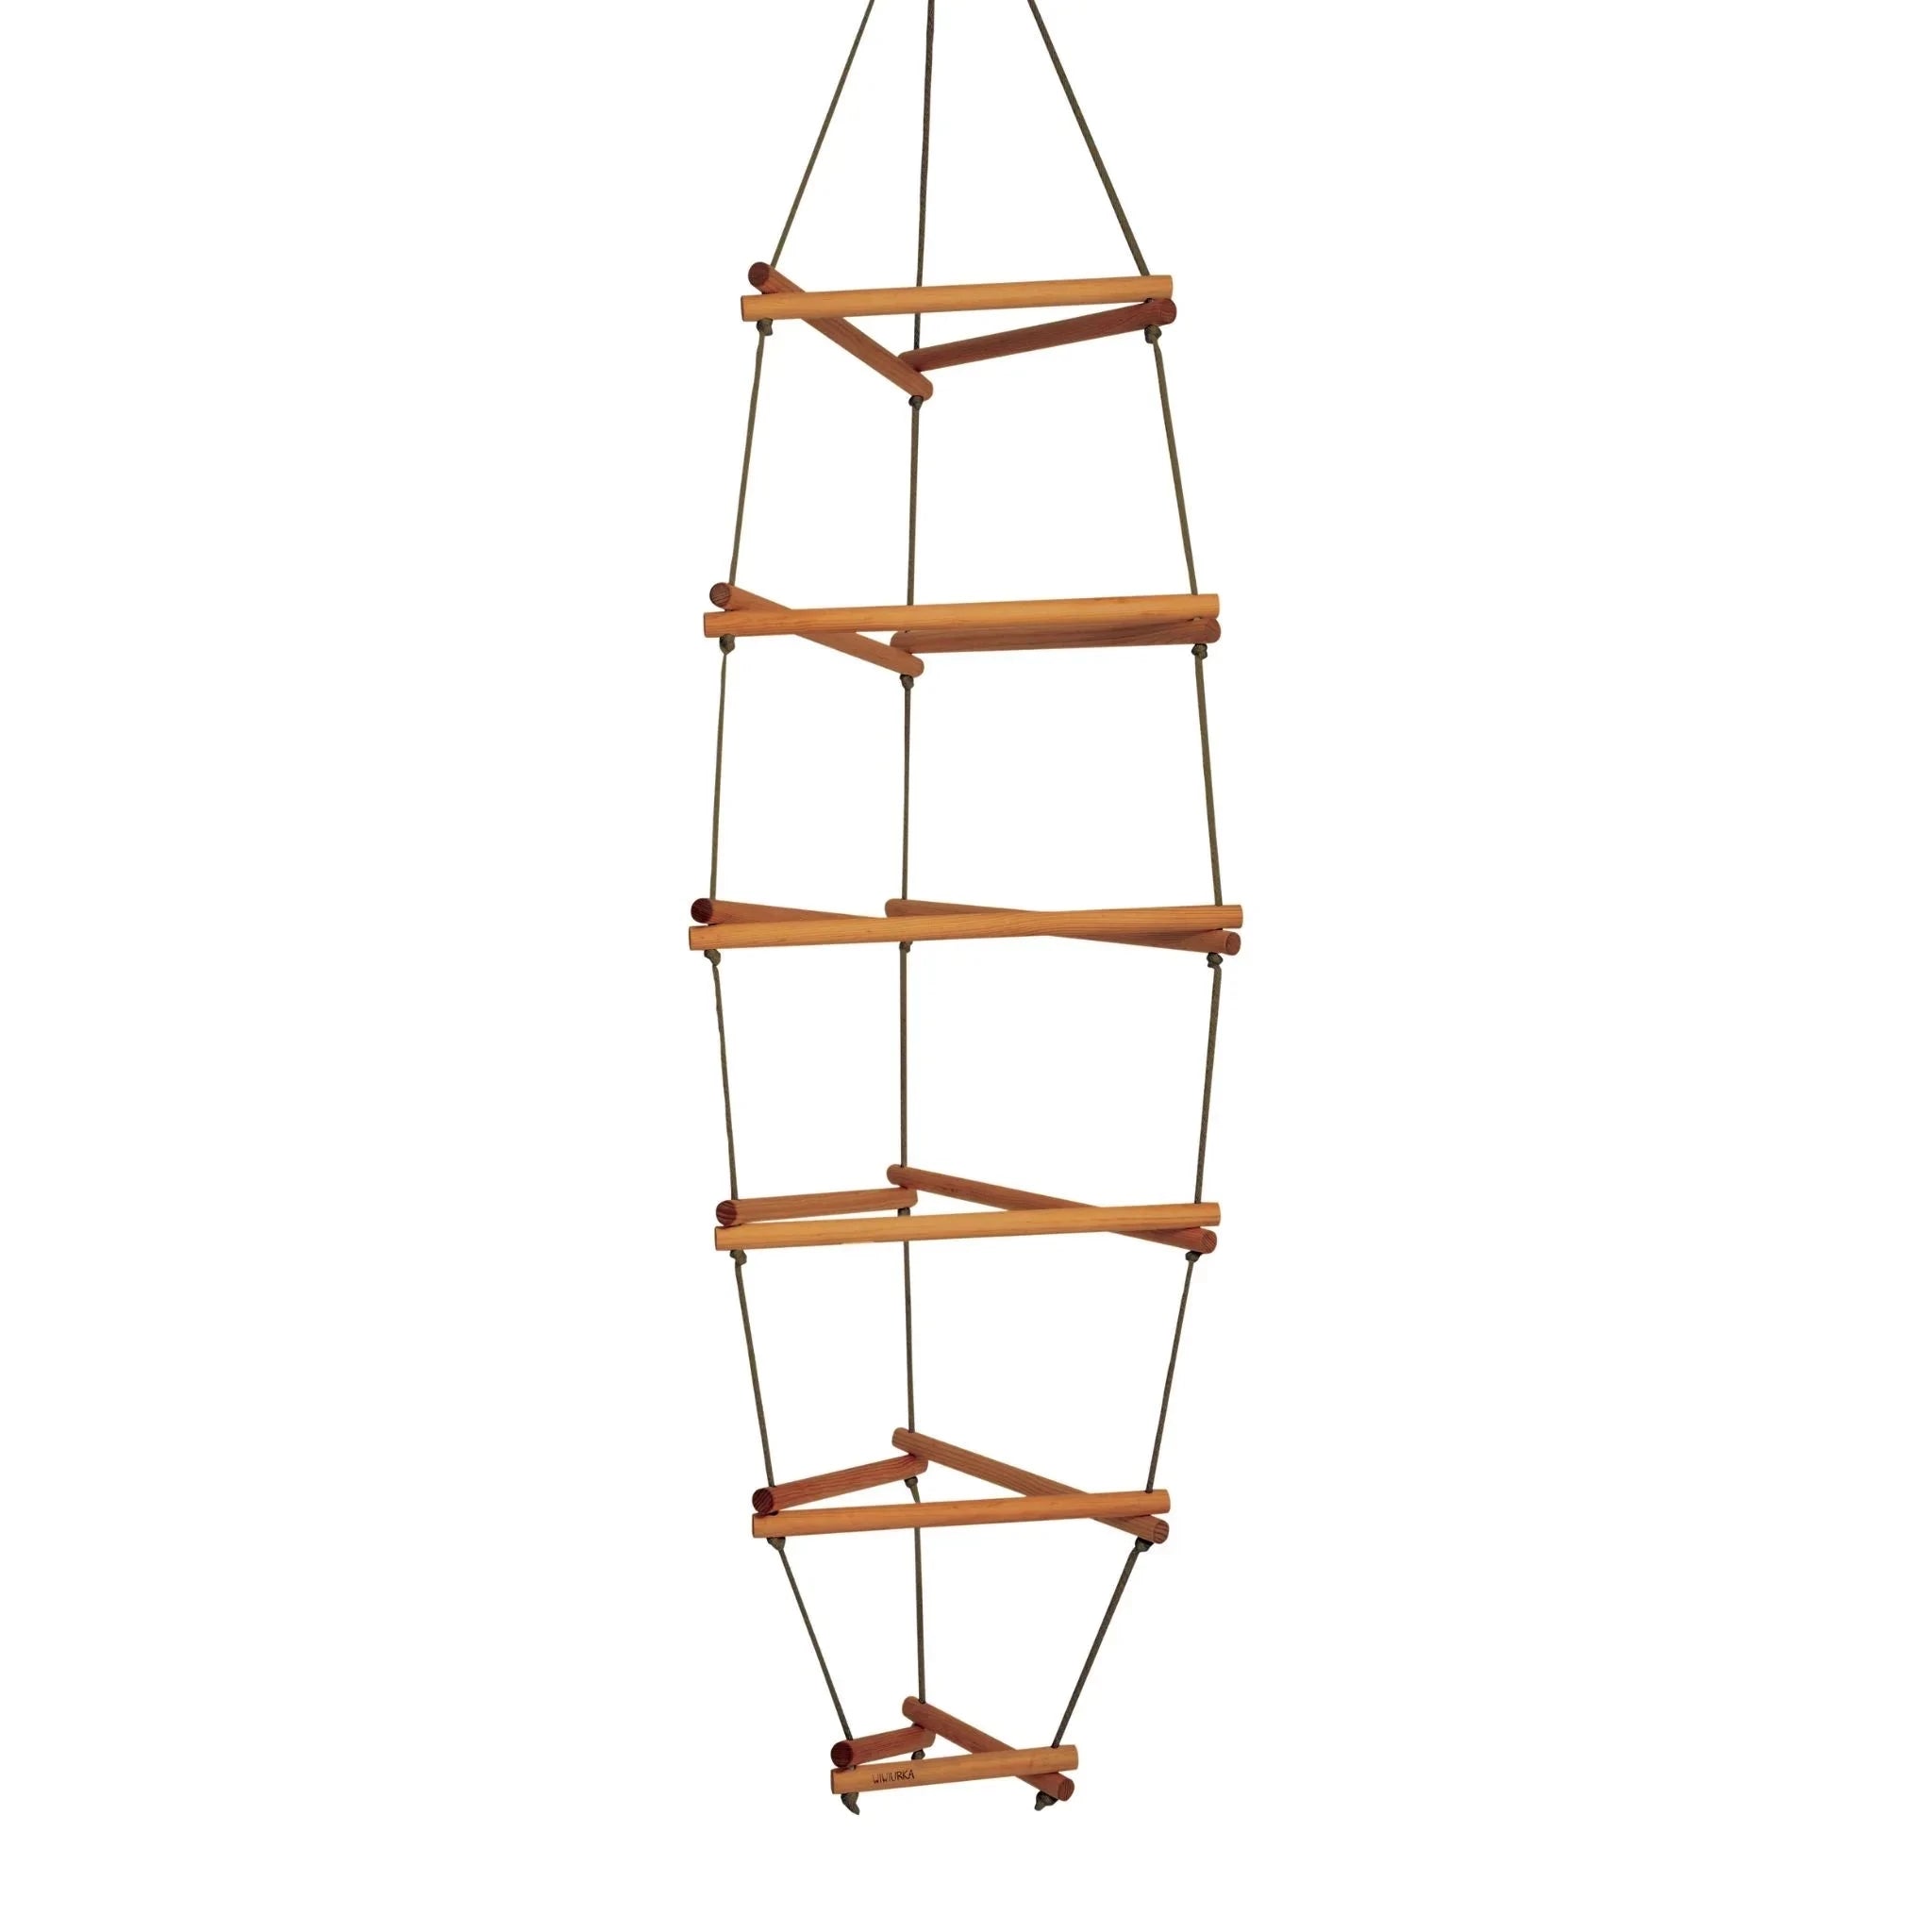 6-Foot Rainbow Triangle Rope-Climbing Ladder